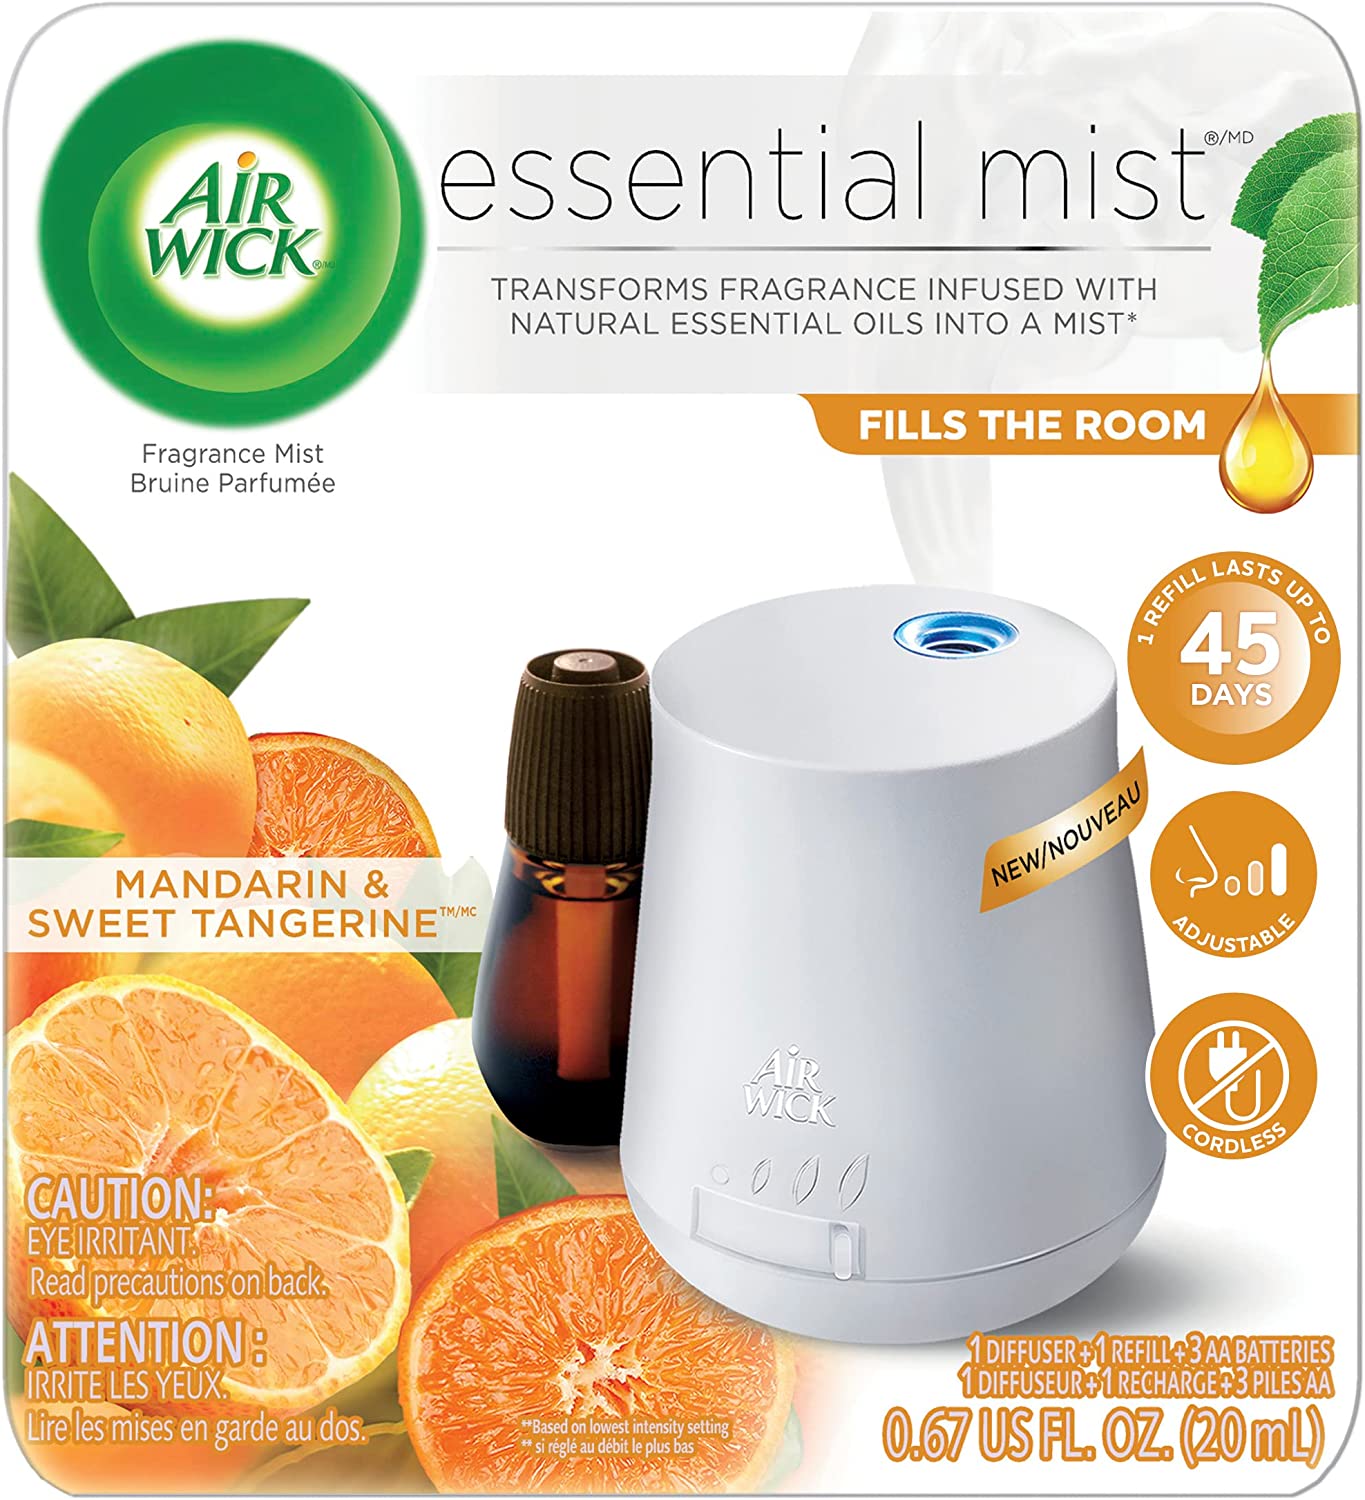 Air Wick Essential Mist, Essential Oil Diffuser, [...]